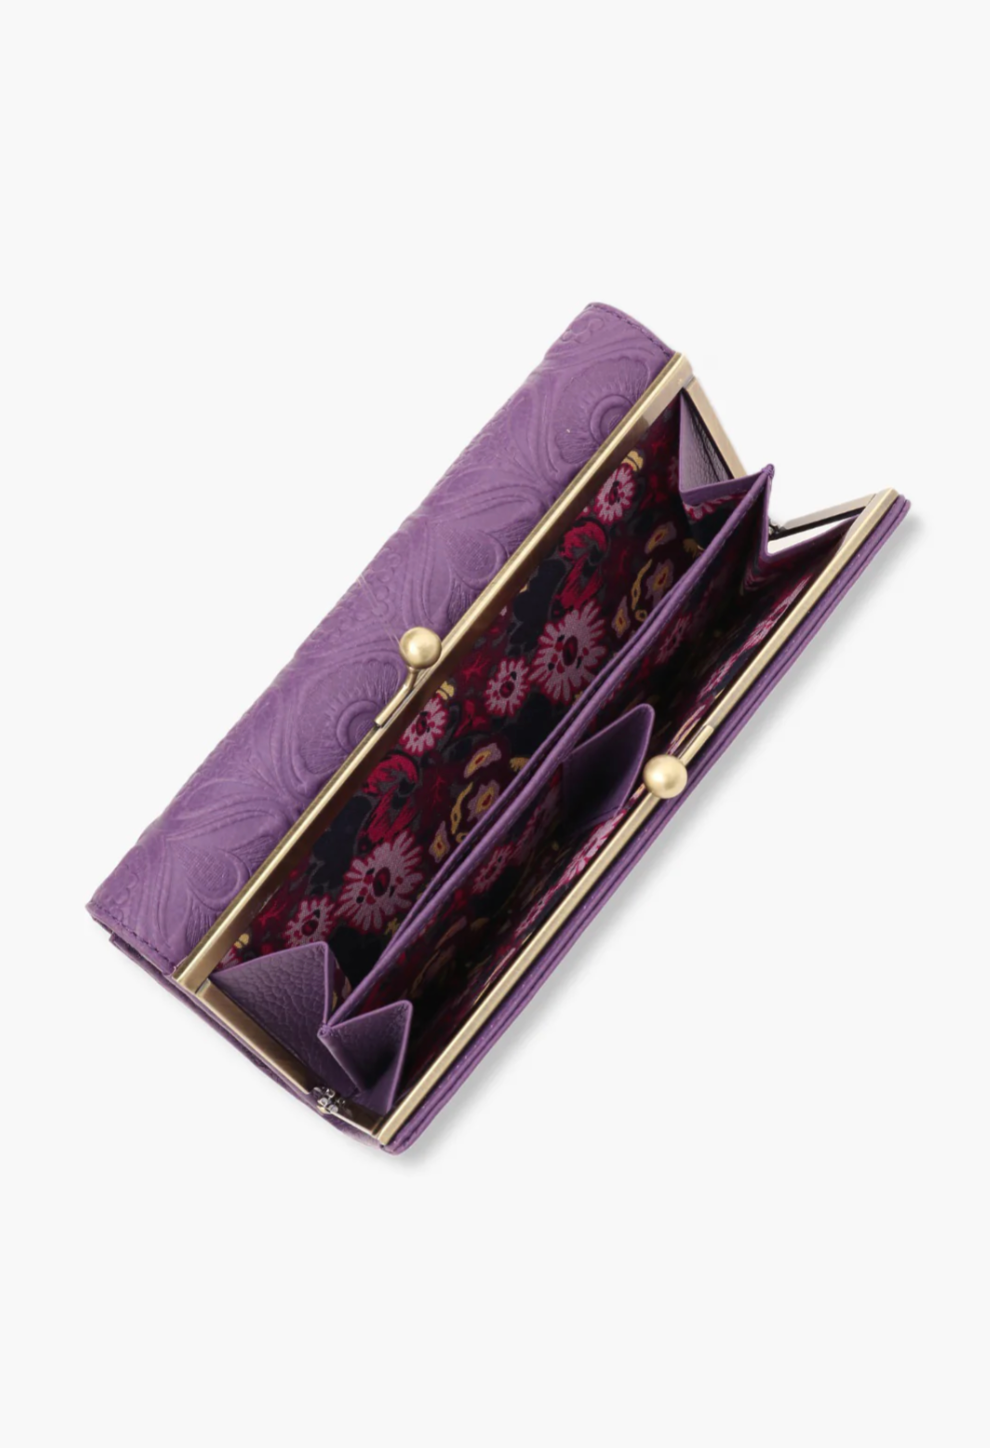 Nova Wallet purple, golden kiss lock closure, purple floral fabric inside